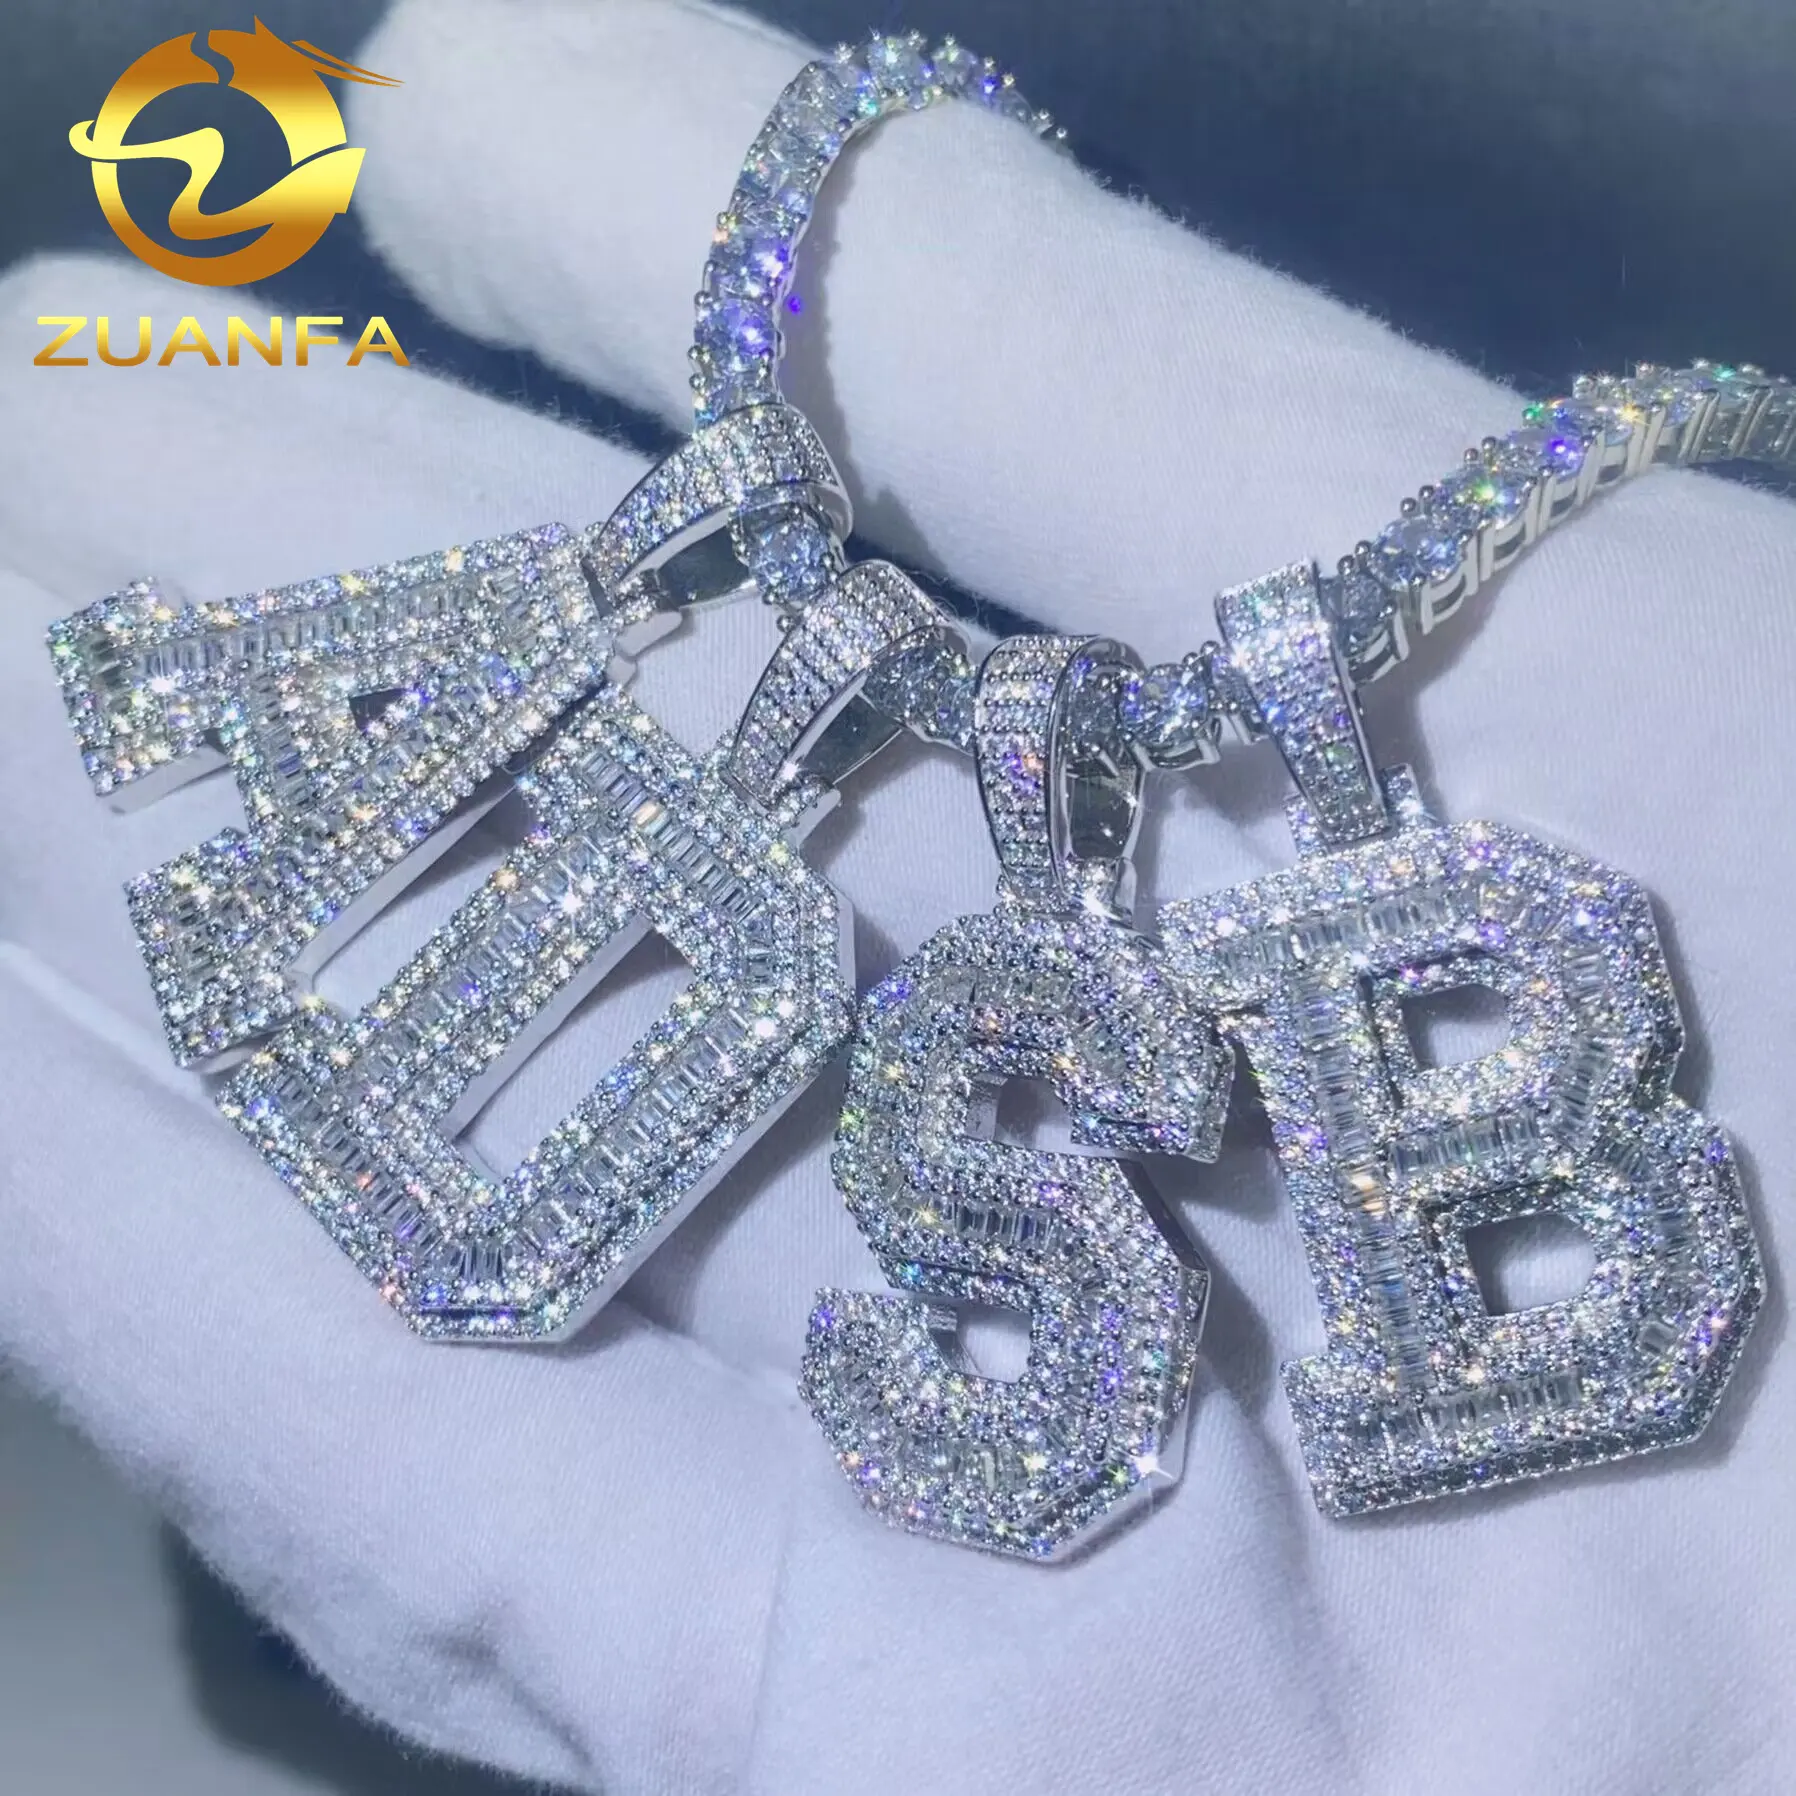 Zuanfa תכשיטים vvvs יהלום מתובל היפ הופ מצופה זהב ביגטה